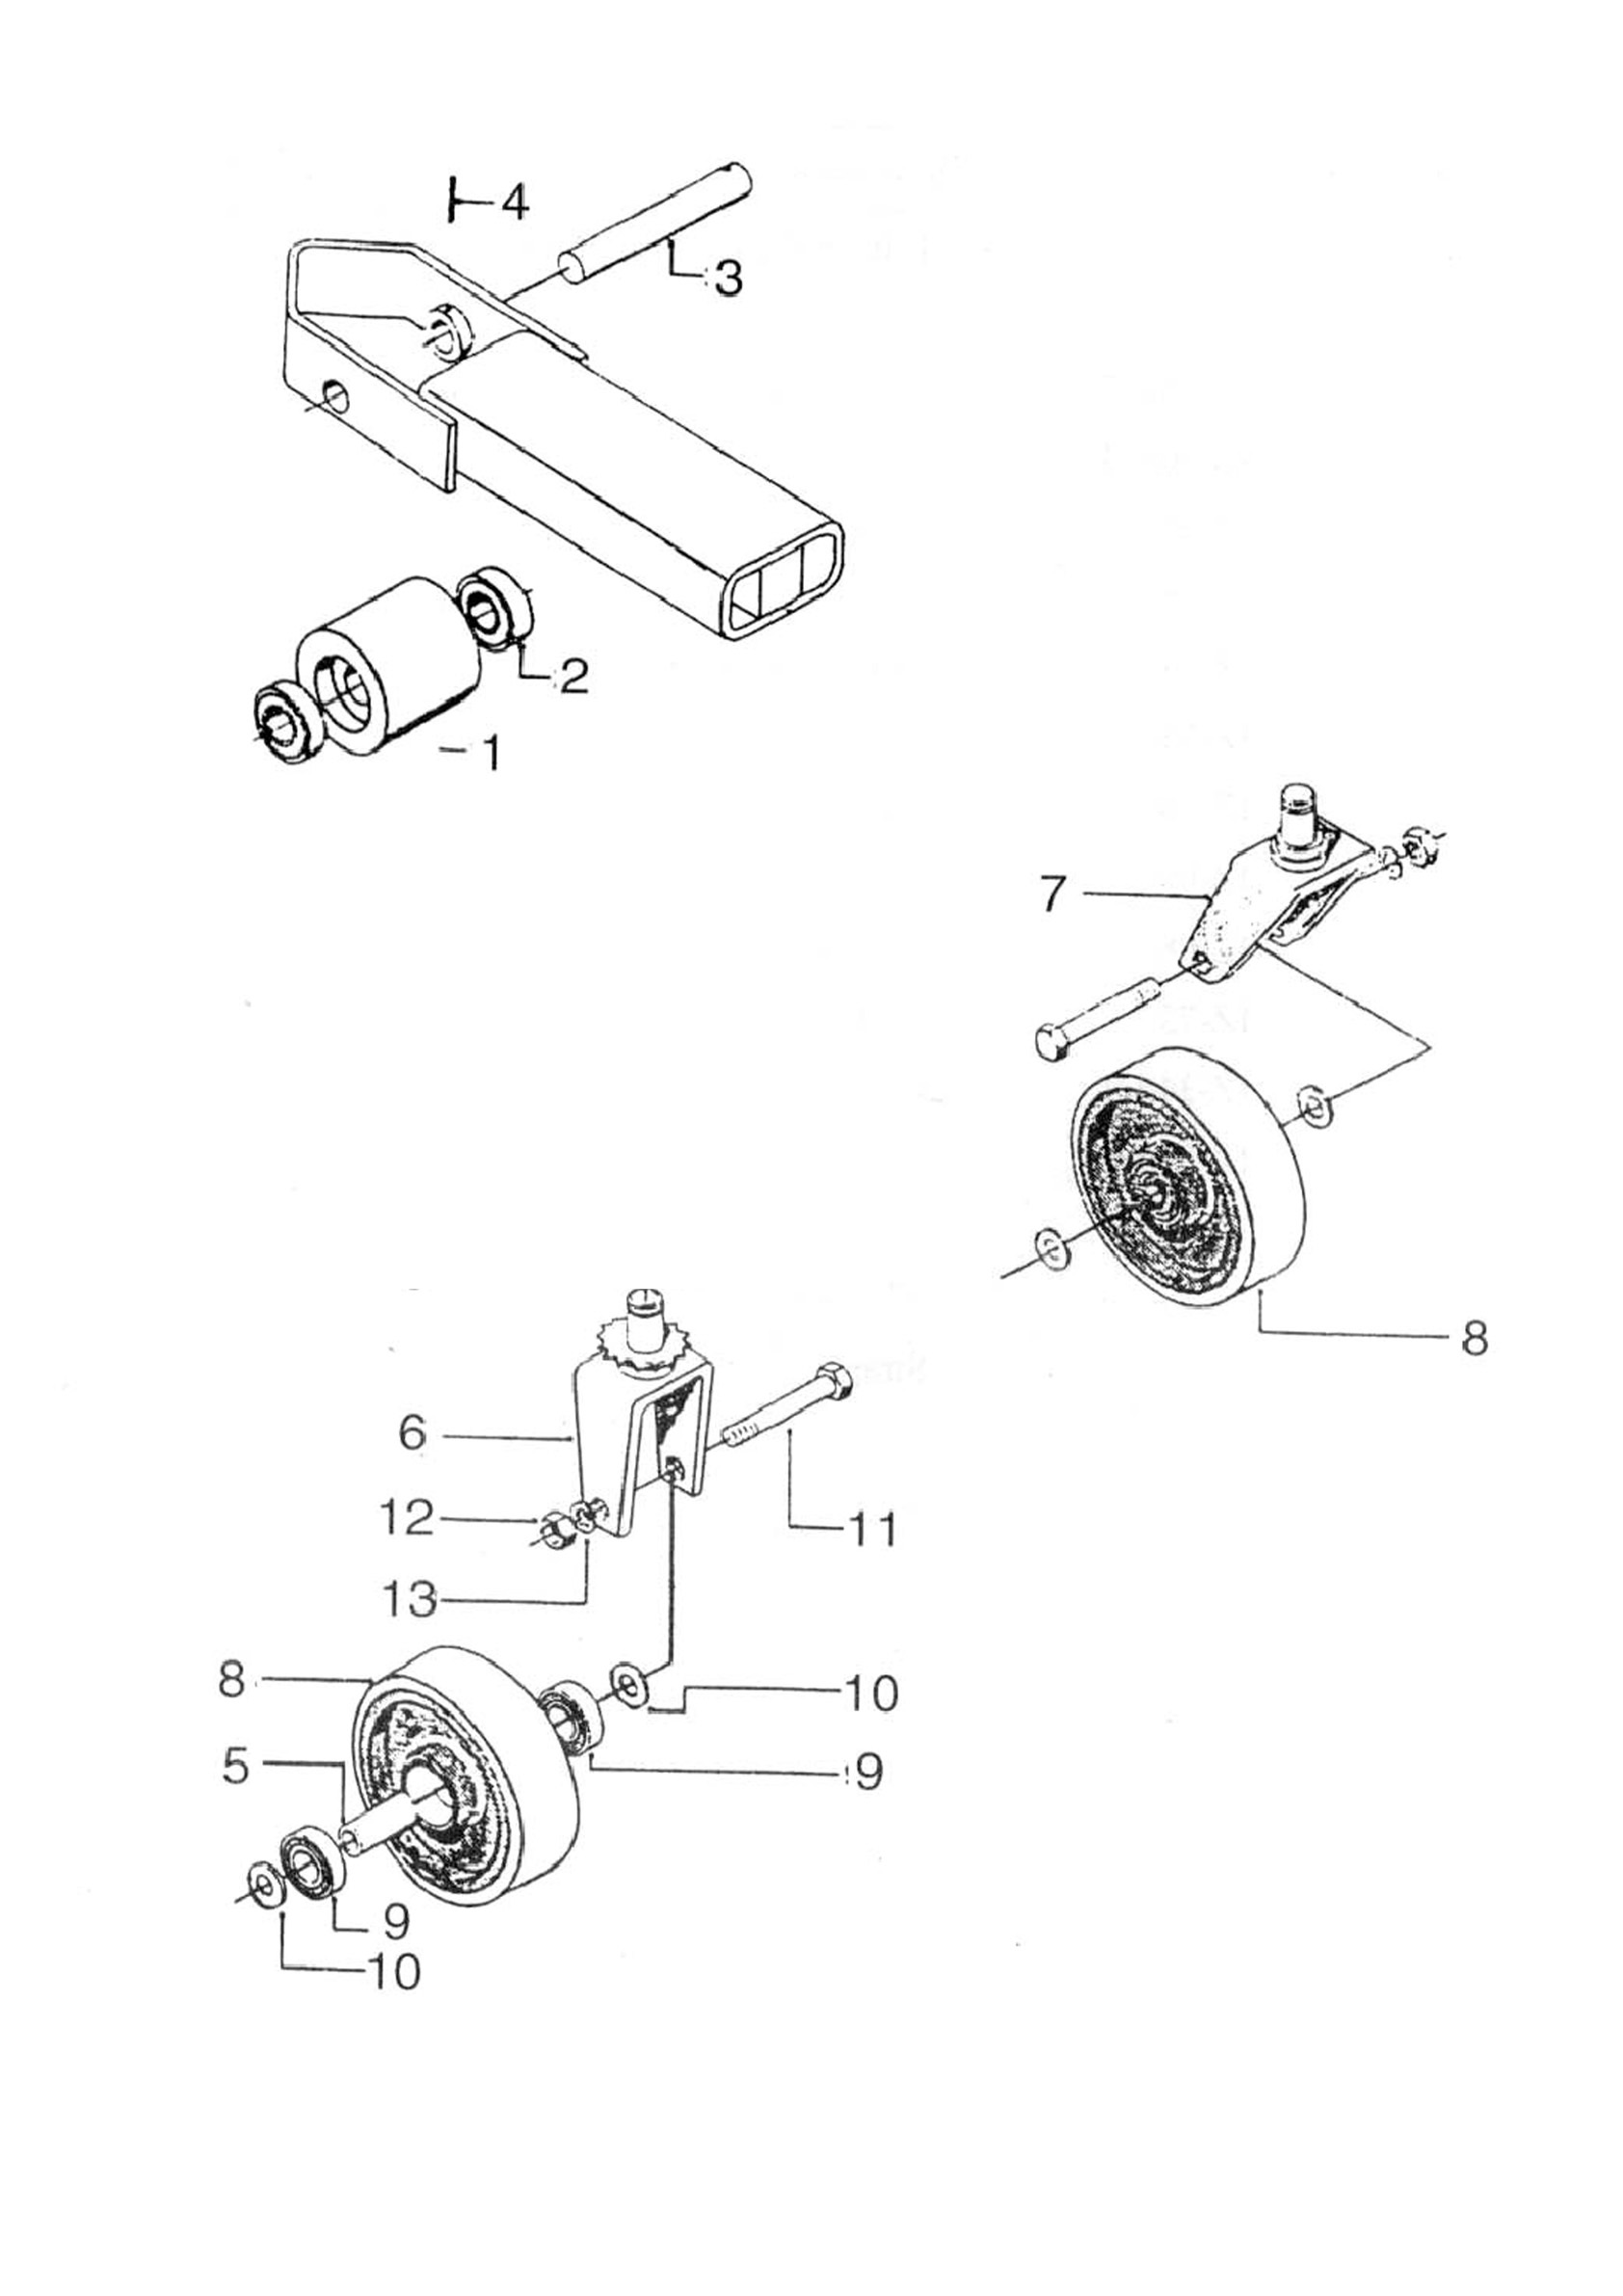 Instruction Manual of Electric Drum Rotator YL450 (Drum Handling Equipment)-4.jpg